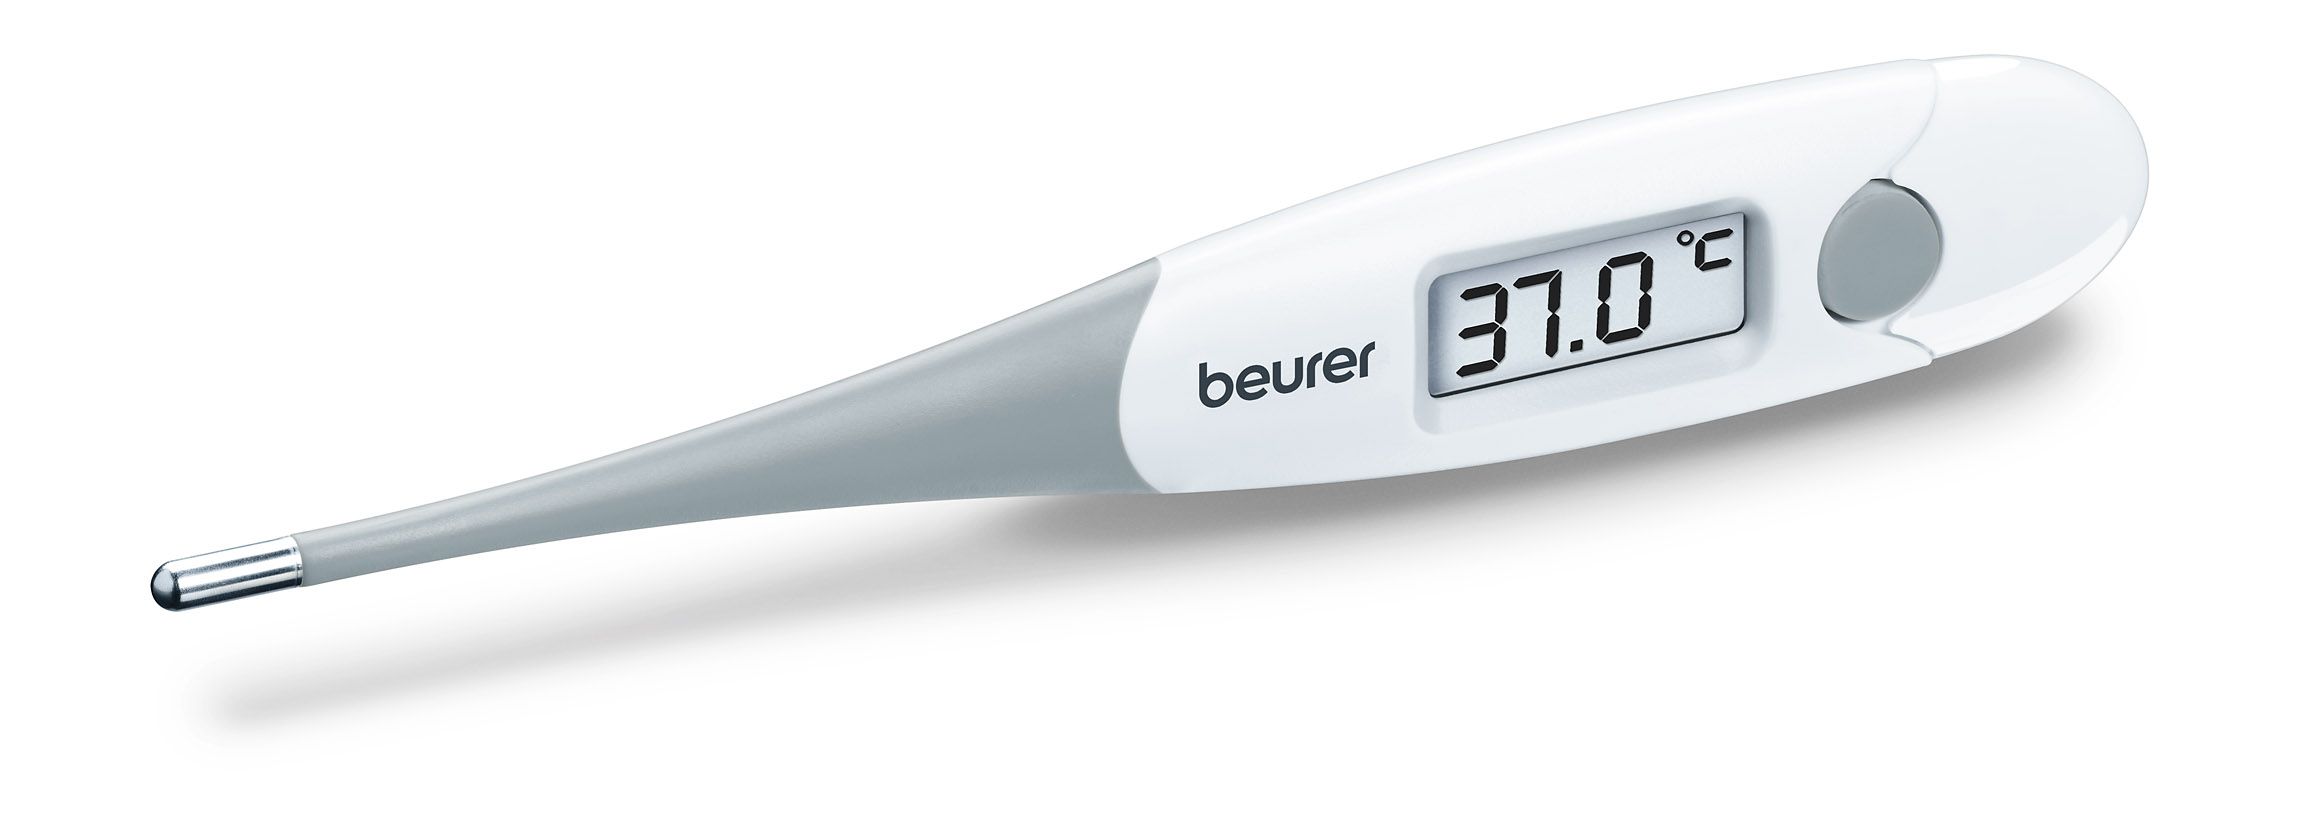 Beurer Thermomètre médical sans contact FT 85 